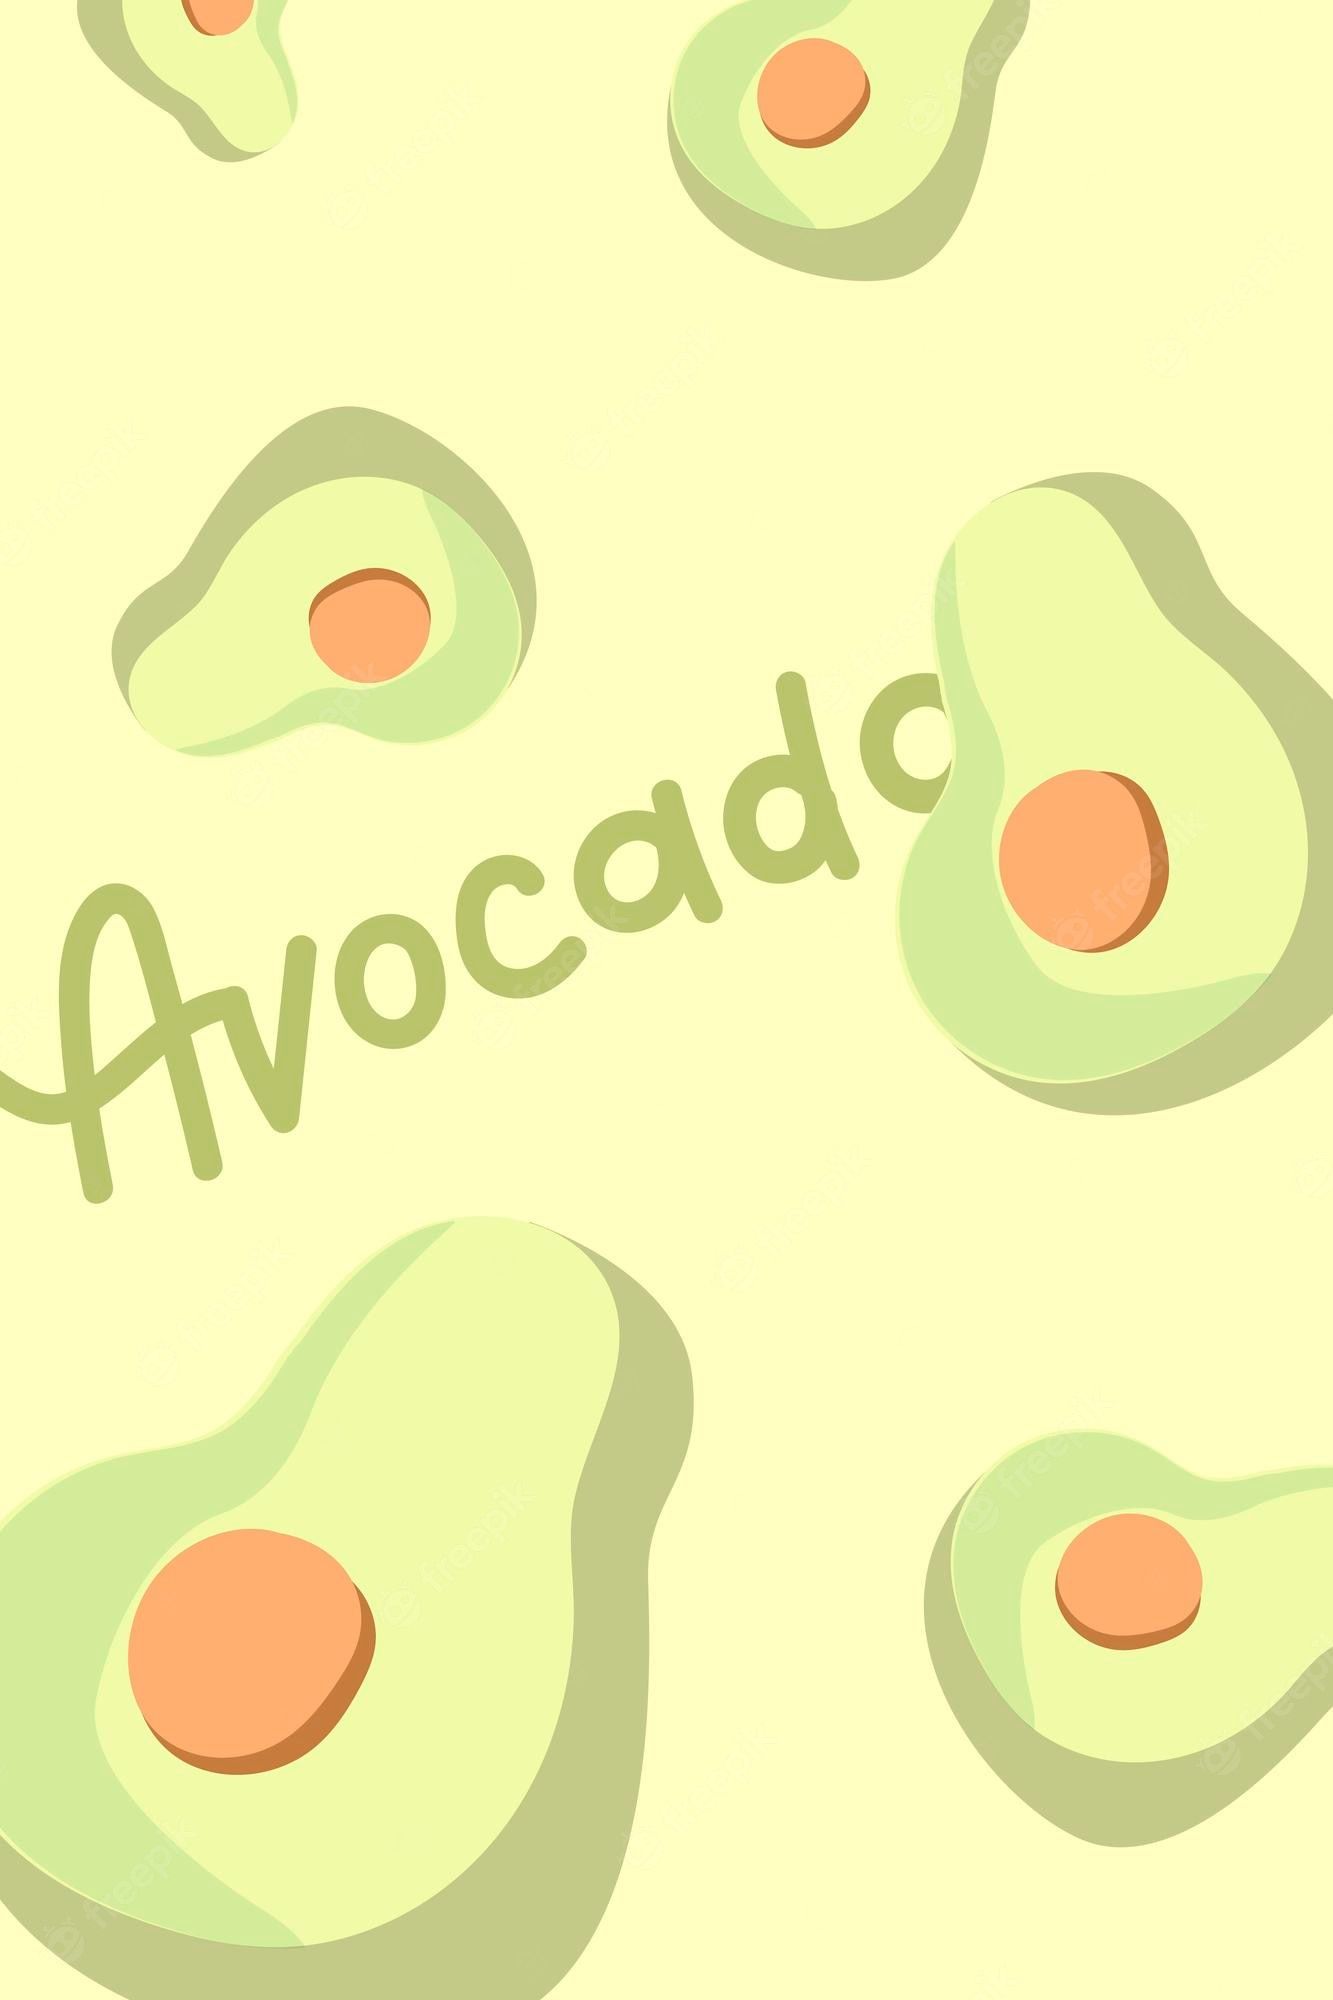 Avocado wallpaper Vectors & Illustrations for Free Download